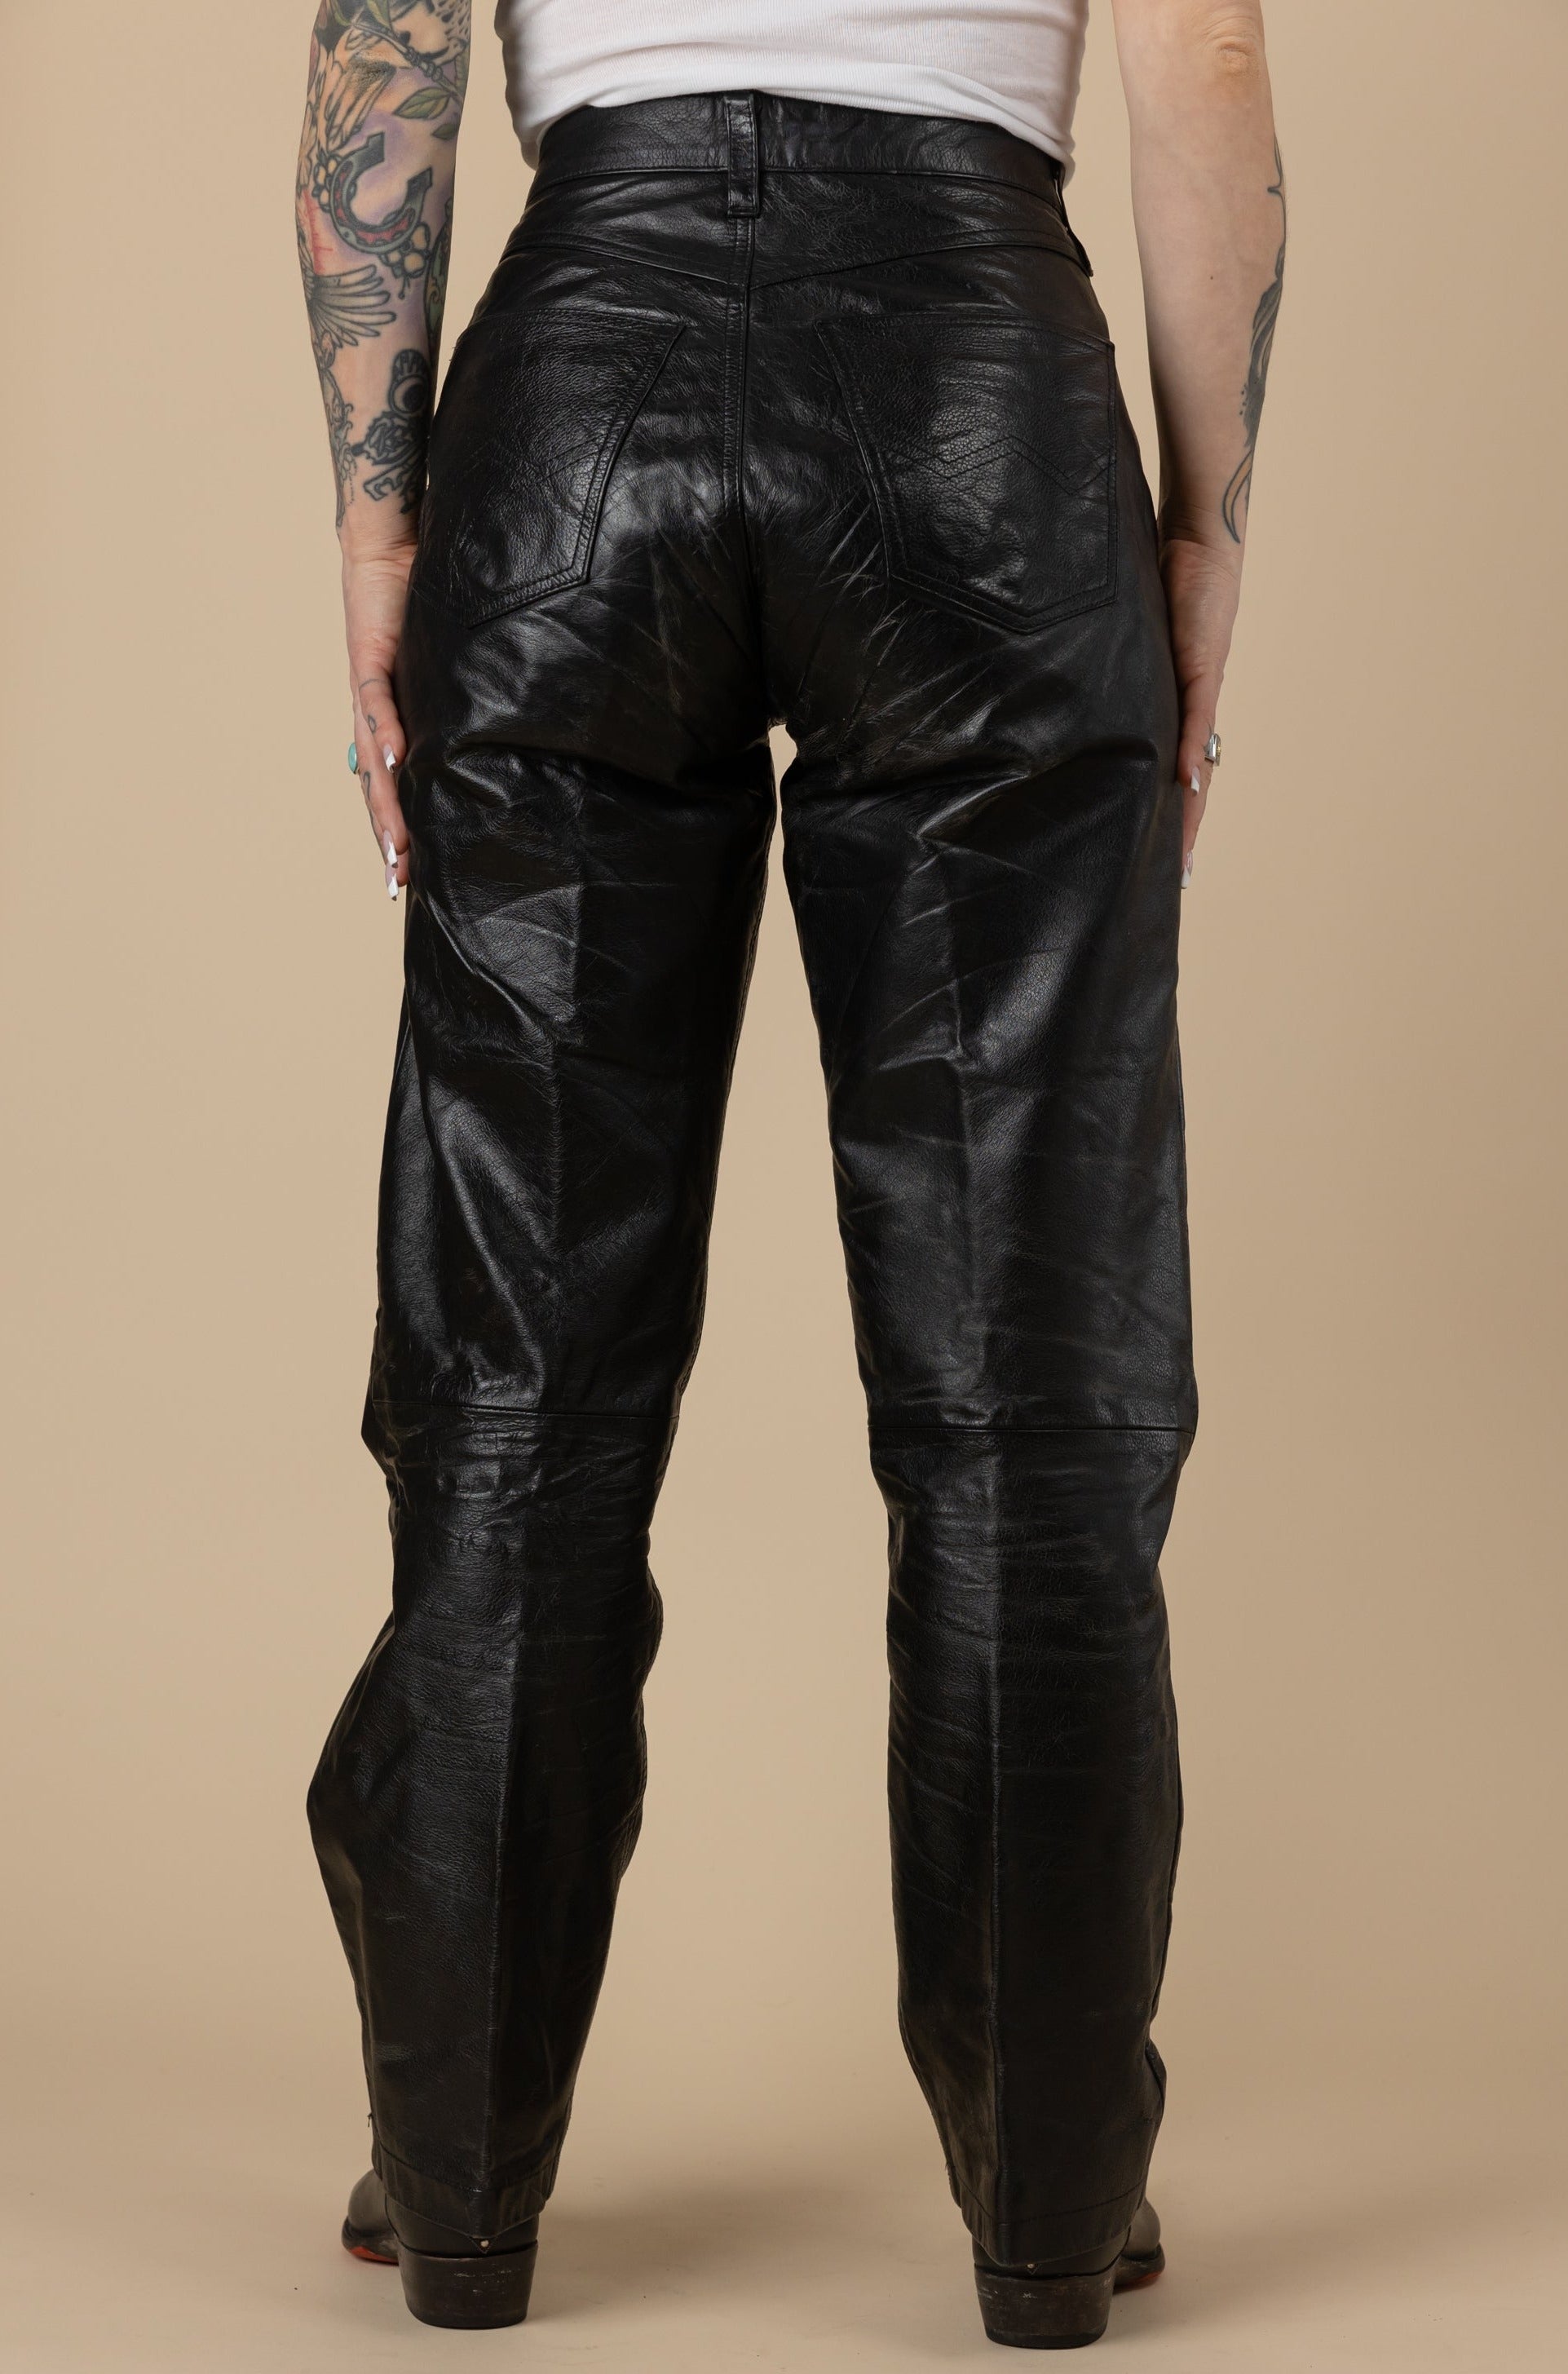 Vintage Harley Davidson Lace-up Leather Pants, Size 4 Black